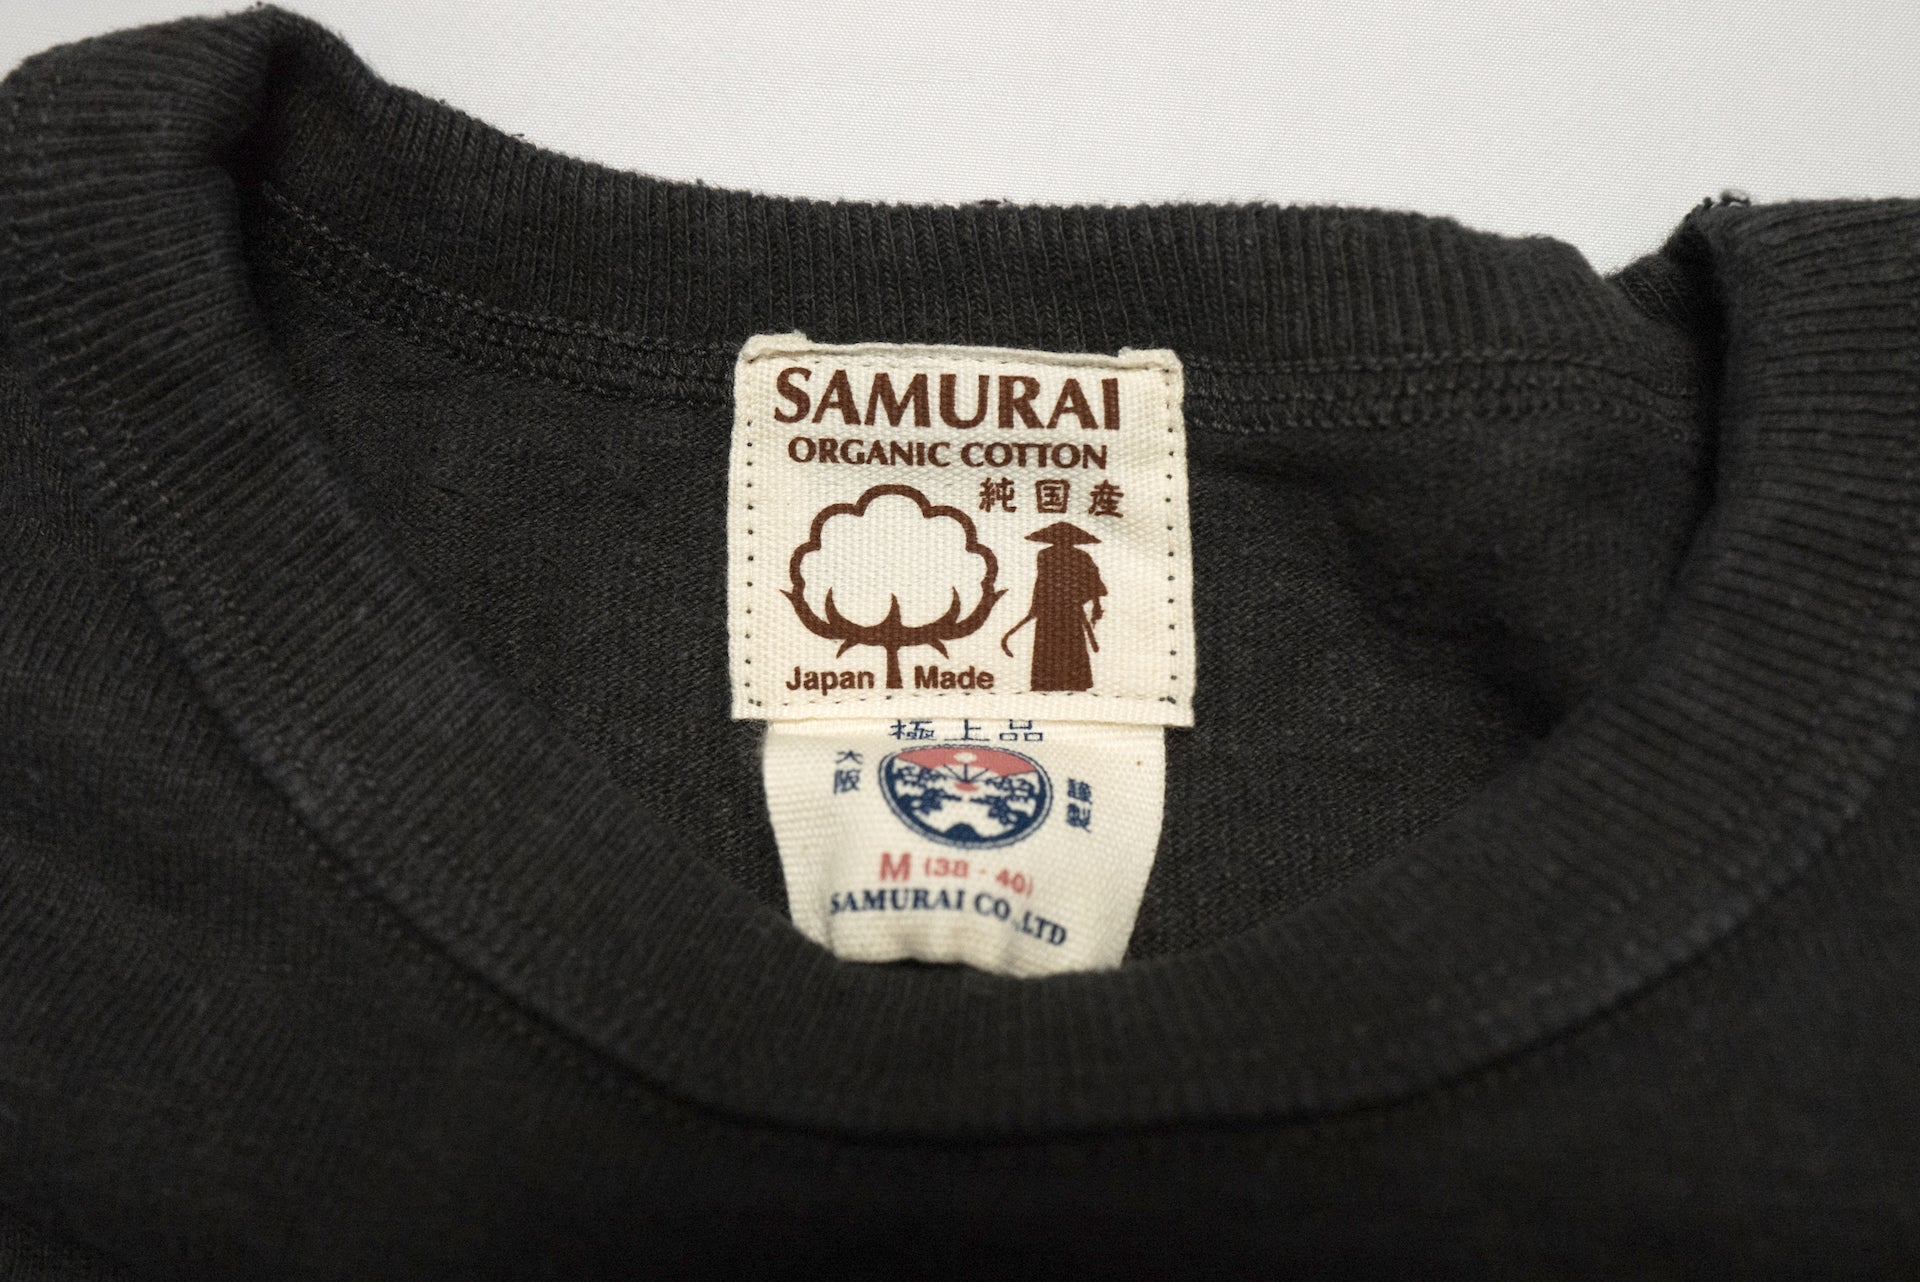 Samurai 11oz "Nippon Cotton" Plain Tee (Kuromame)